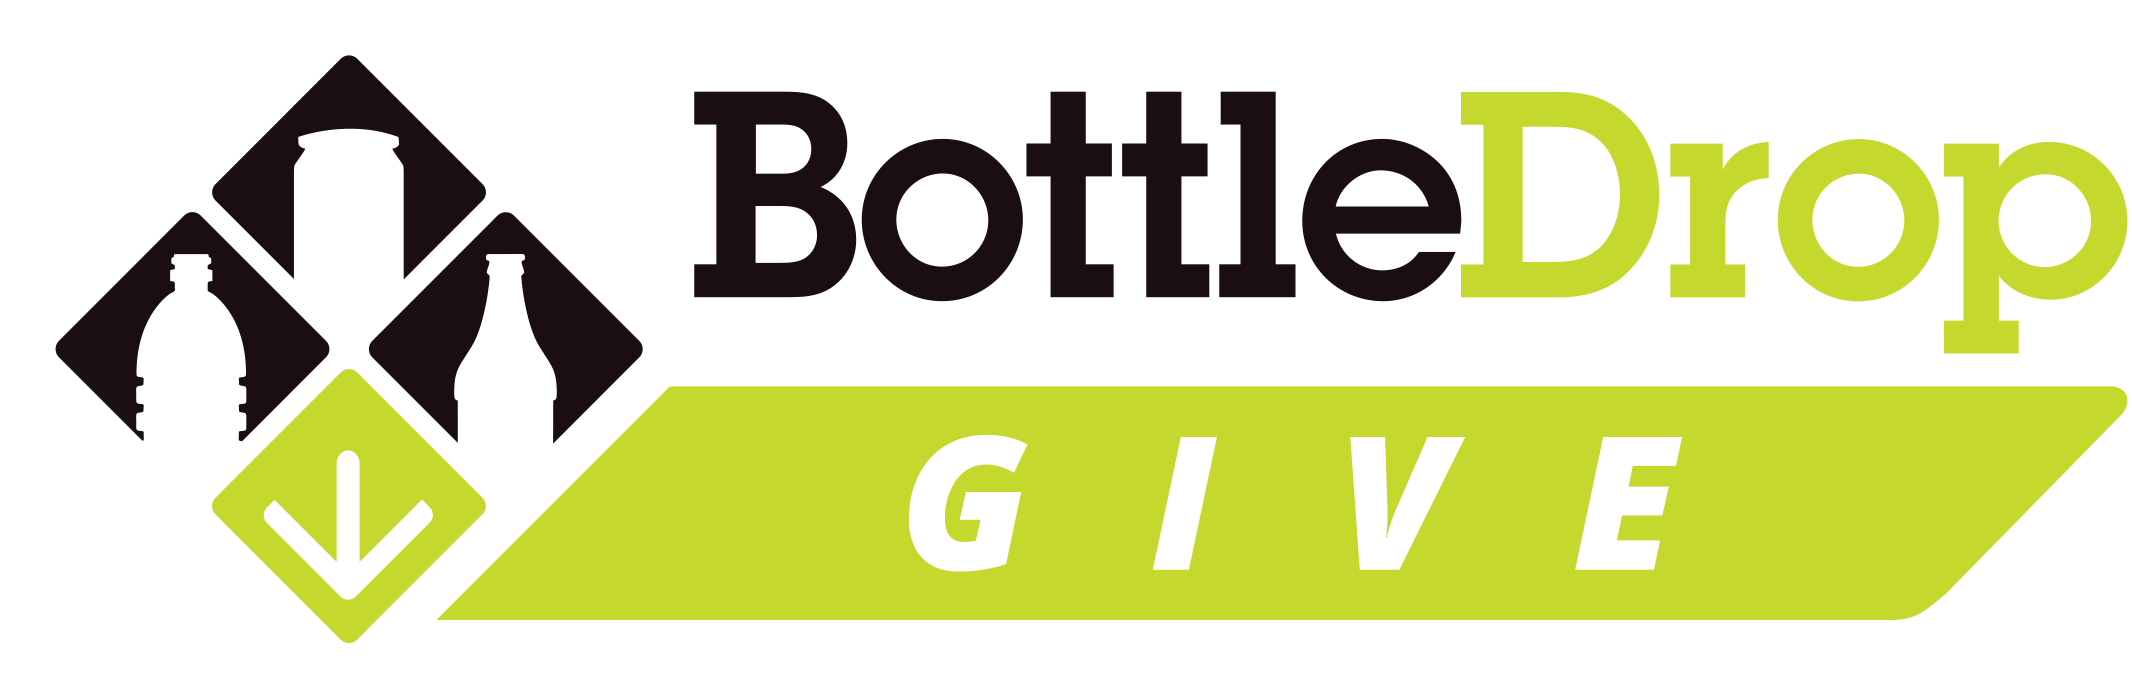 Bottle Drop Logo - BottleDrop. Newberg Animal Shelter